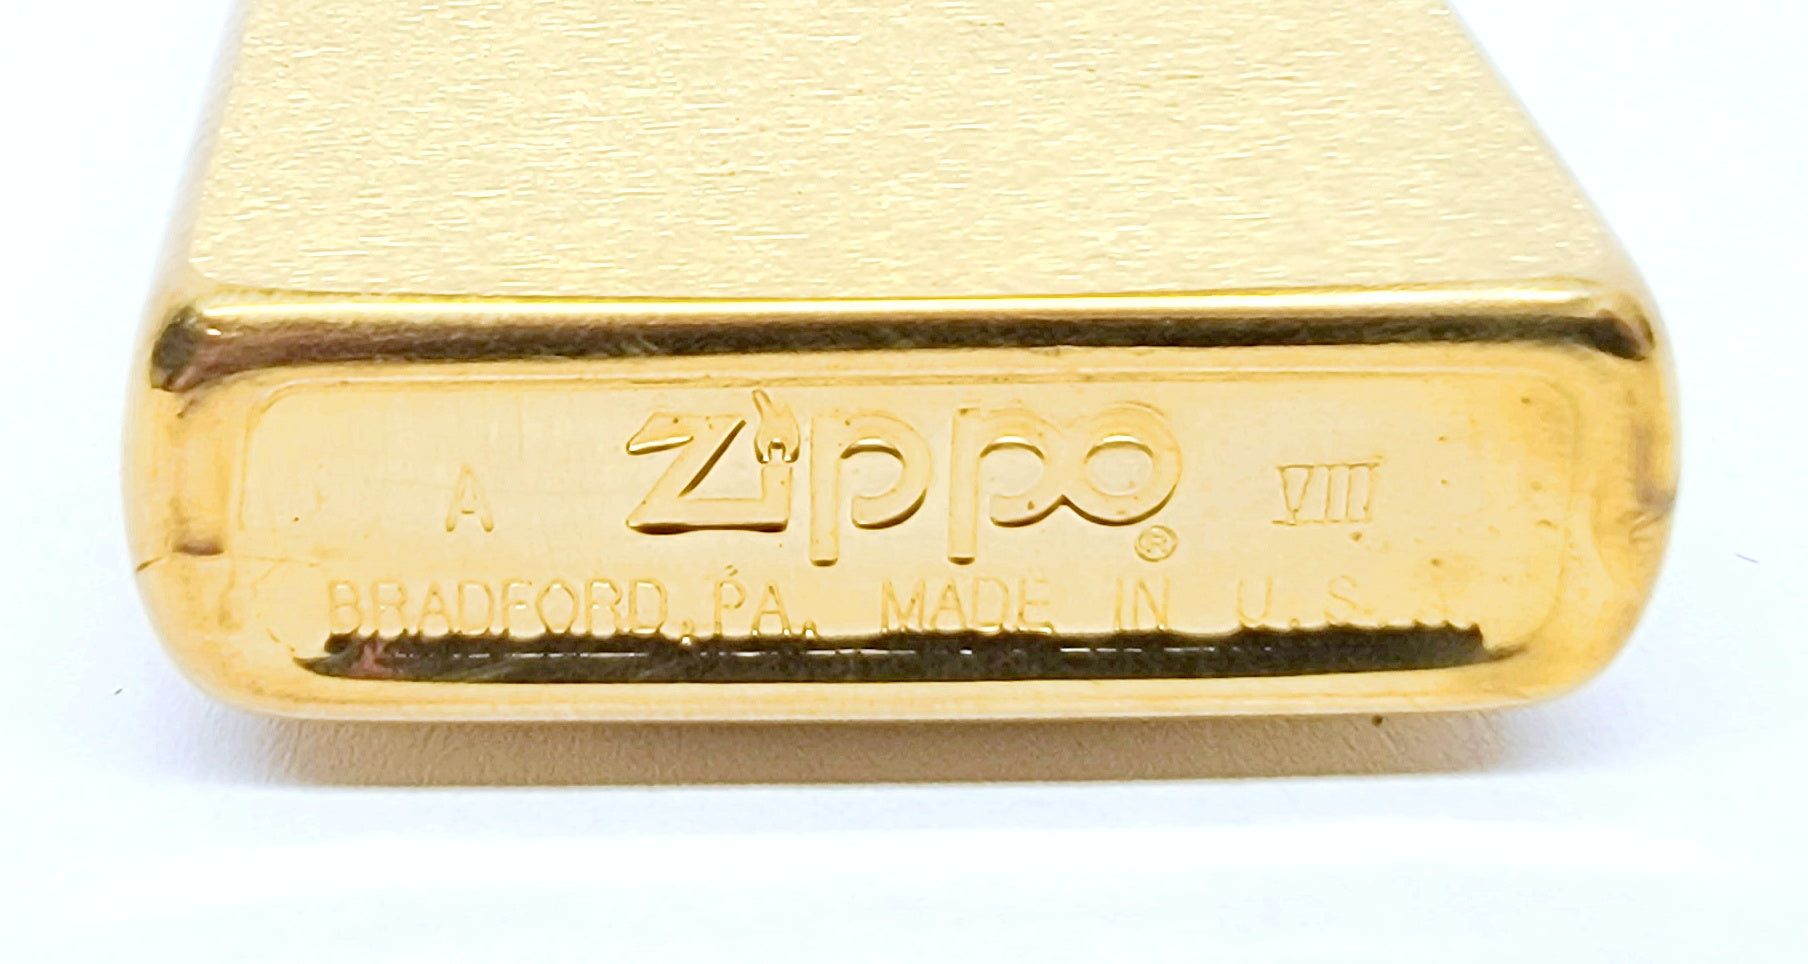 New VIII 1992 Marlboro Star Longhorn Steer Brass Zippo Lighter in Box